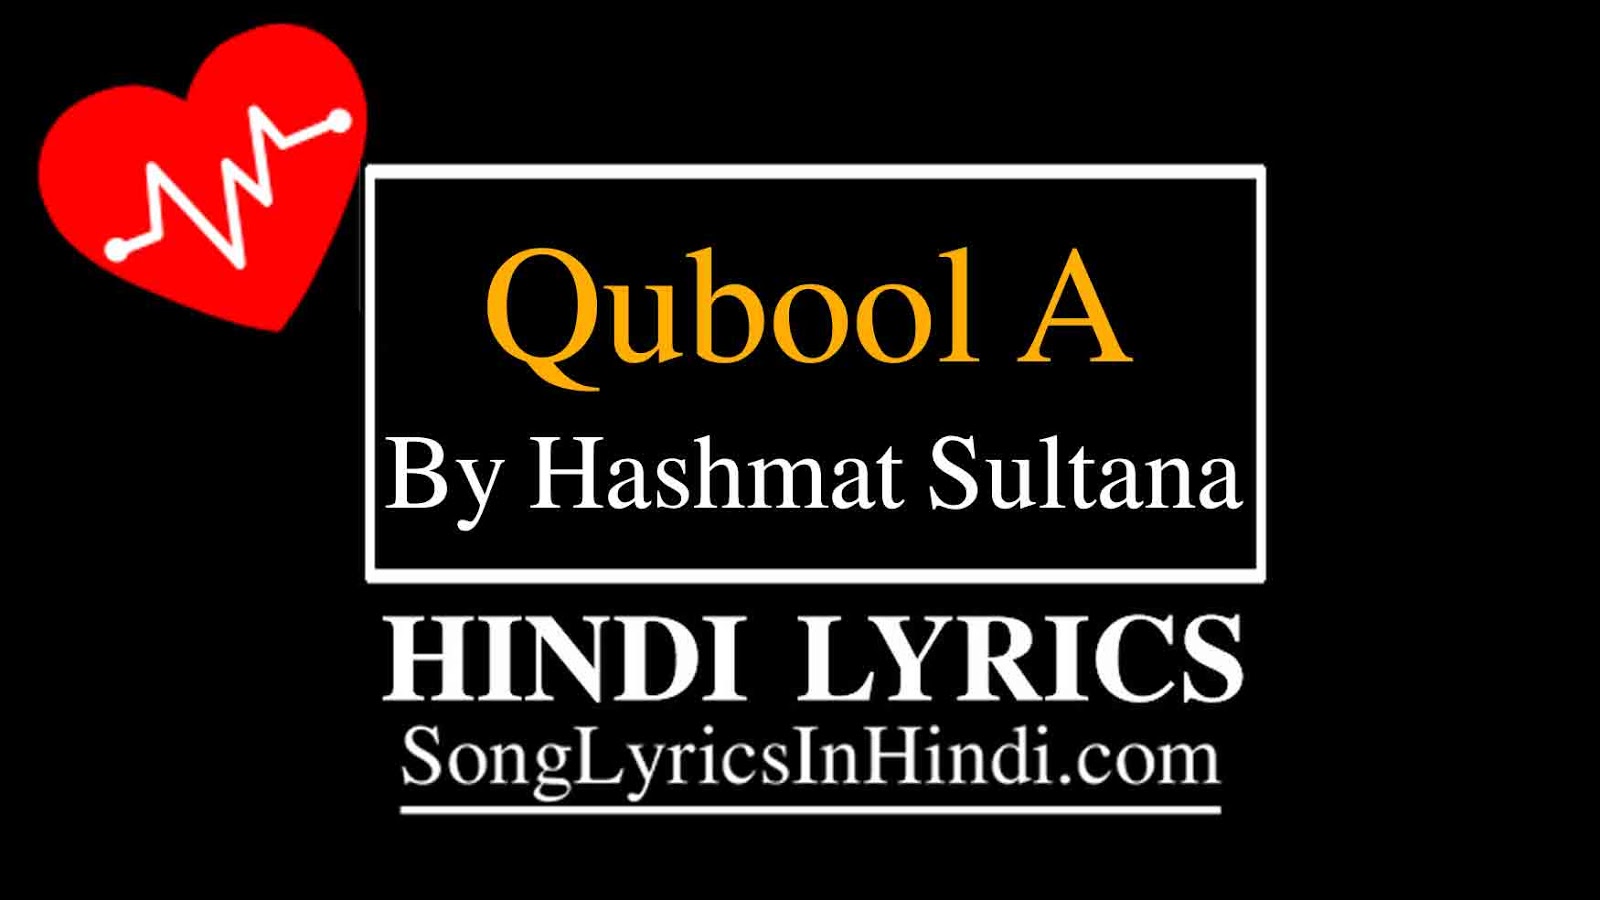 Qubool A By Hashmat Sultana Lyrics